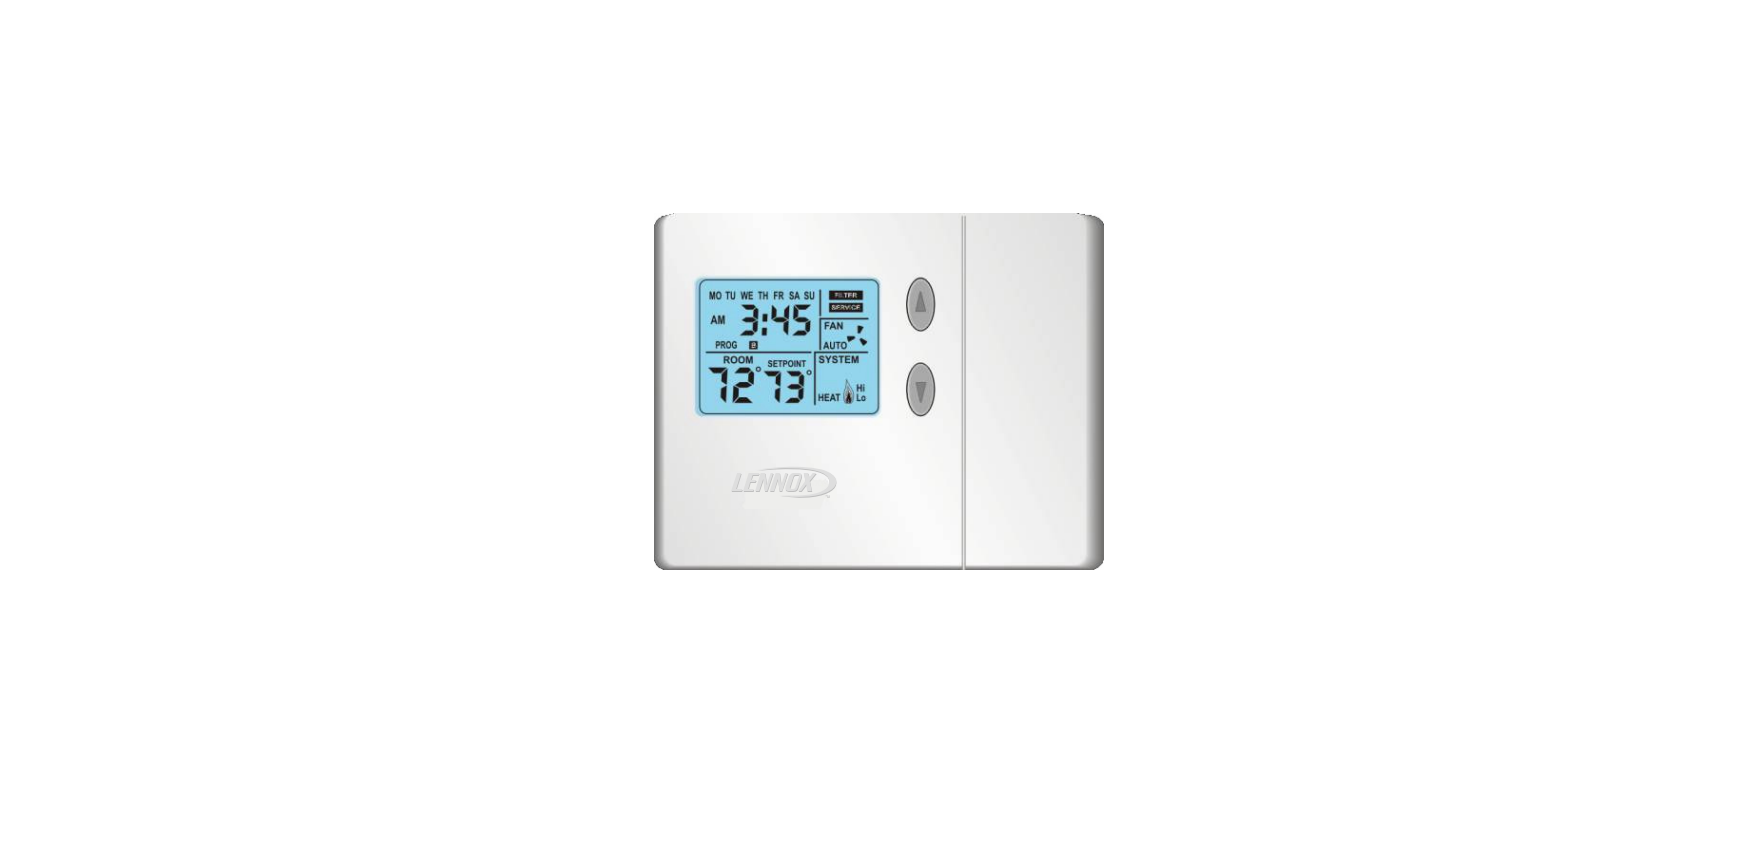 Lennox L3511C 5/2 Days Programmable Thermostat Installation Instruction